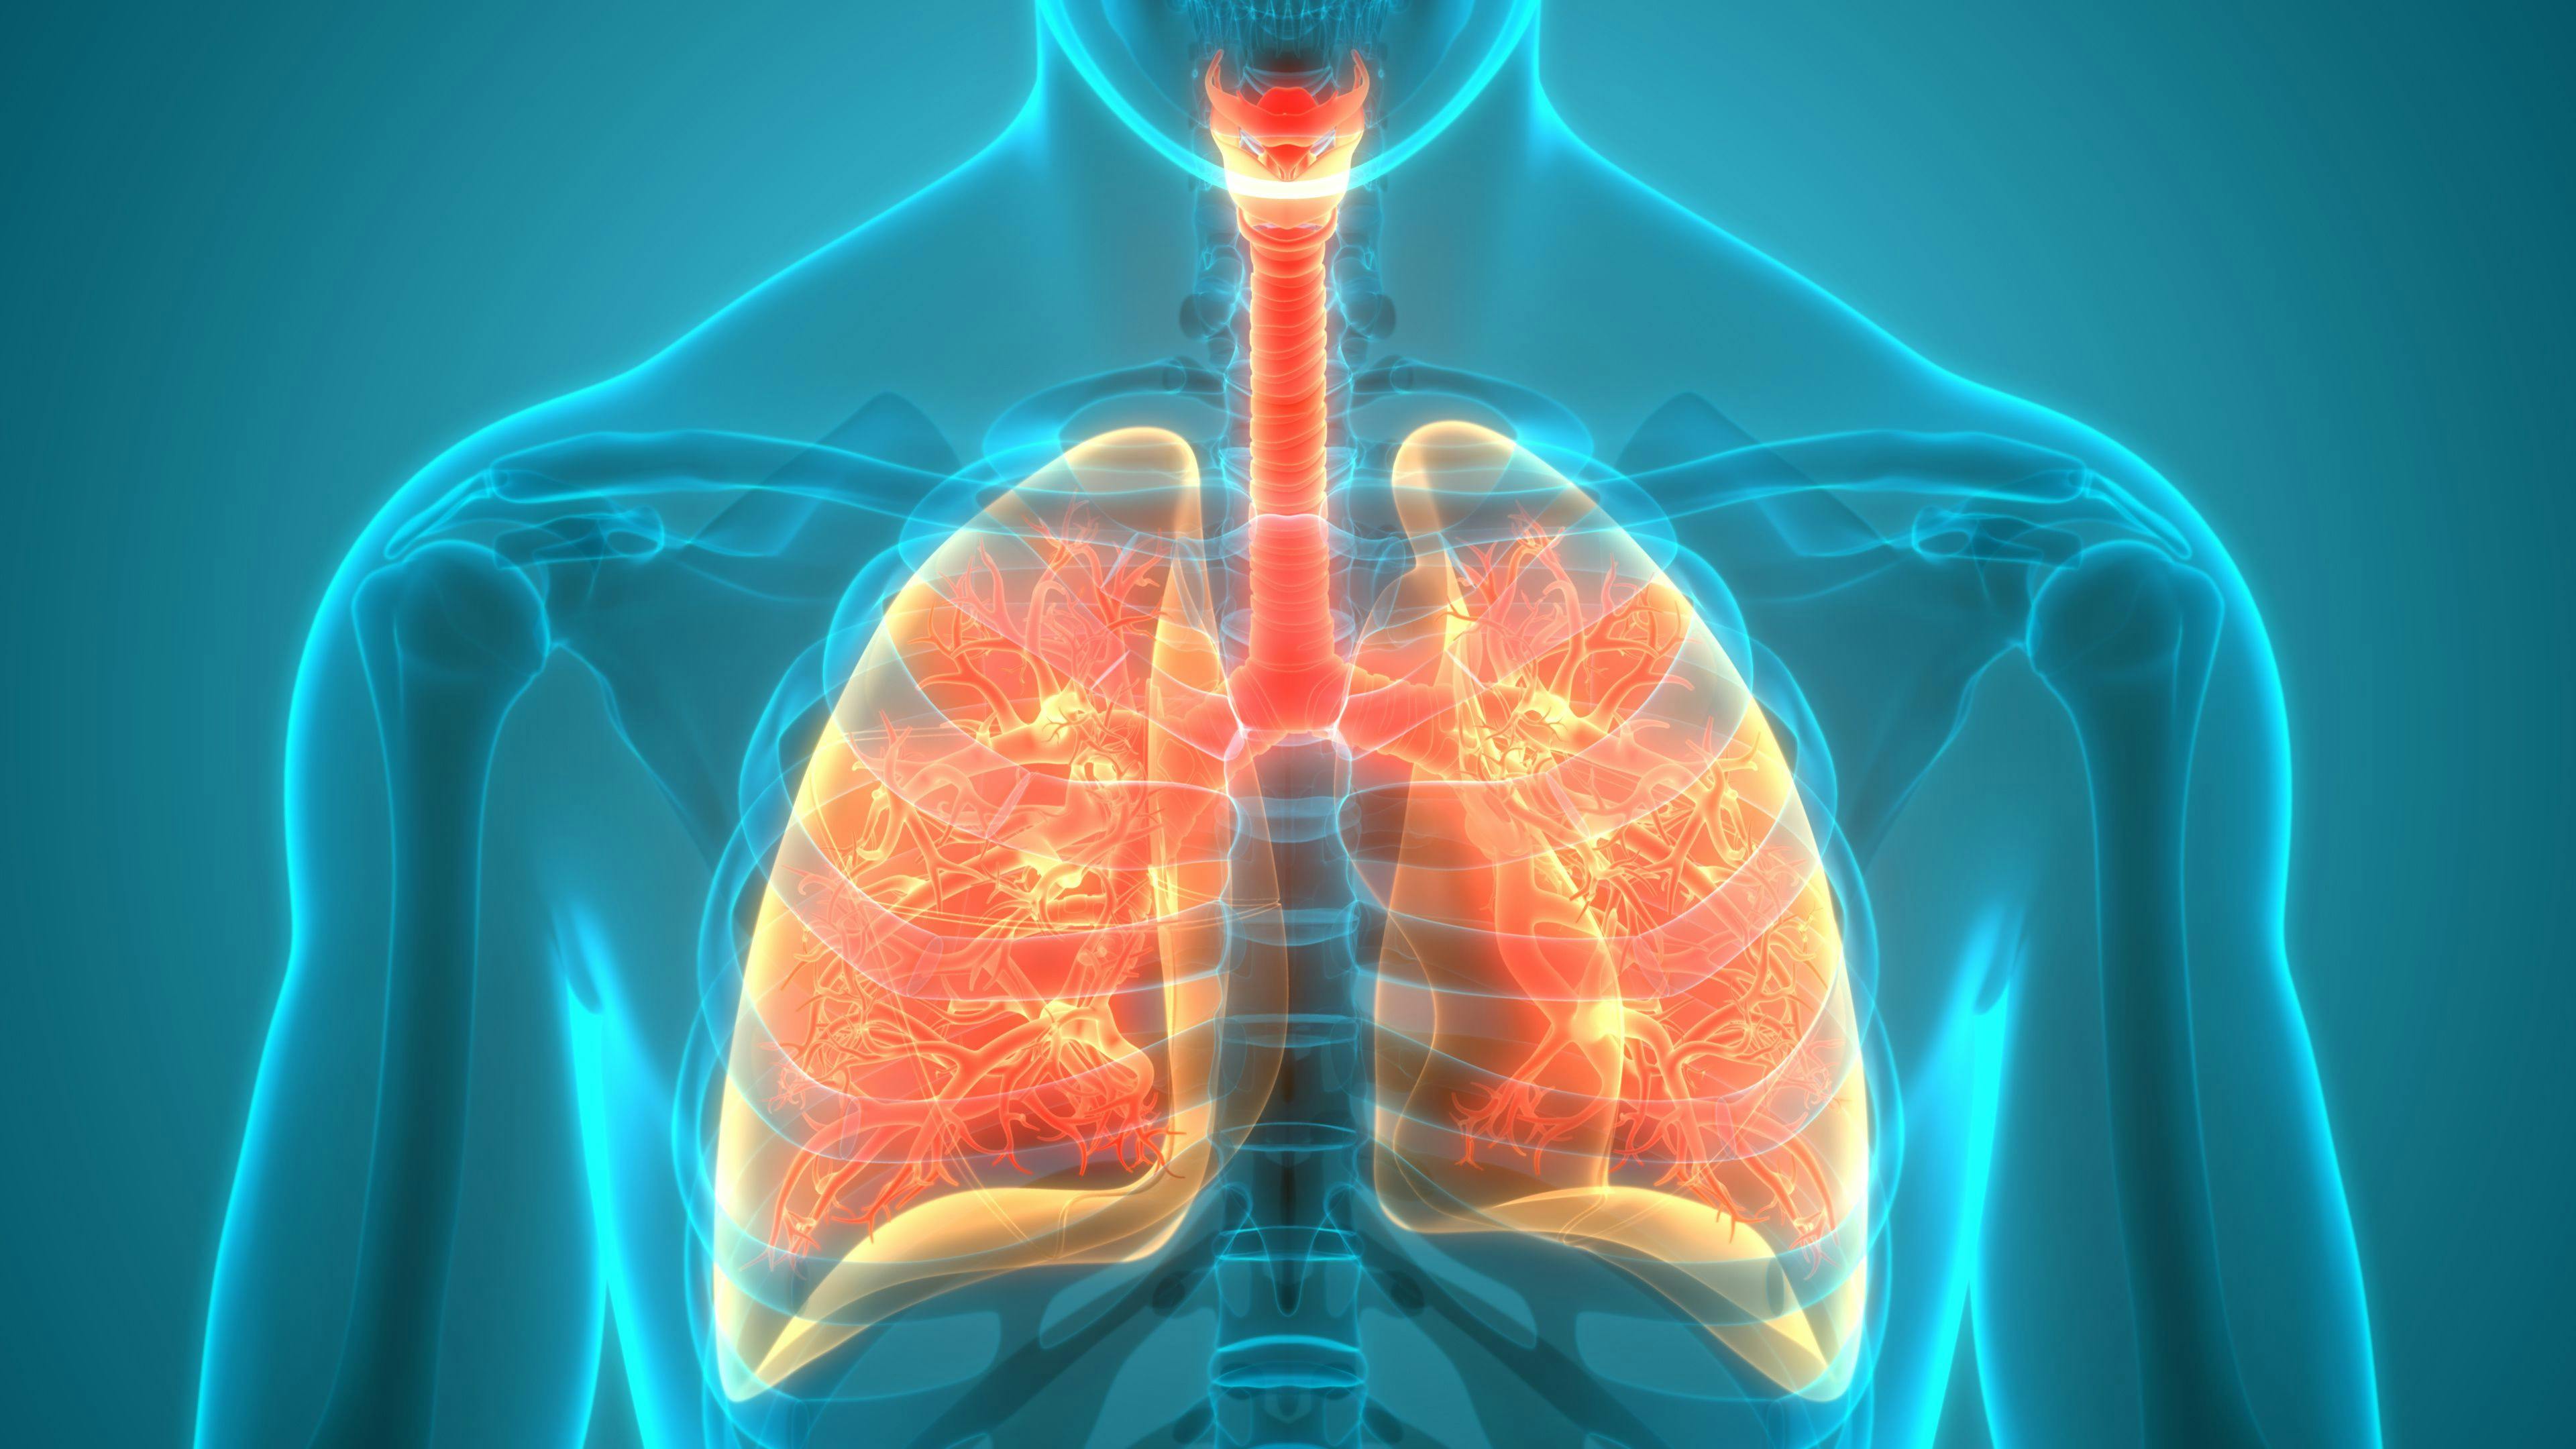 Digital illustration of lungs. | Credit: Adobe Stock